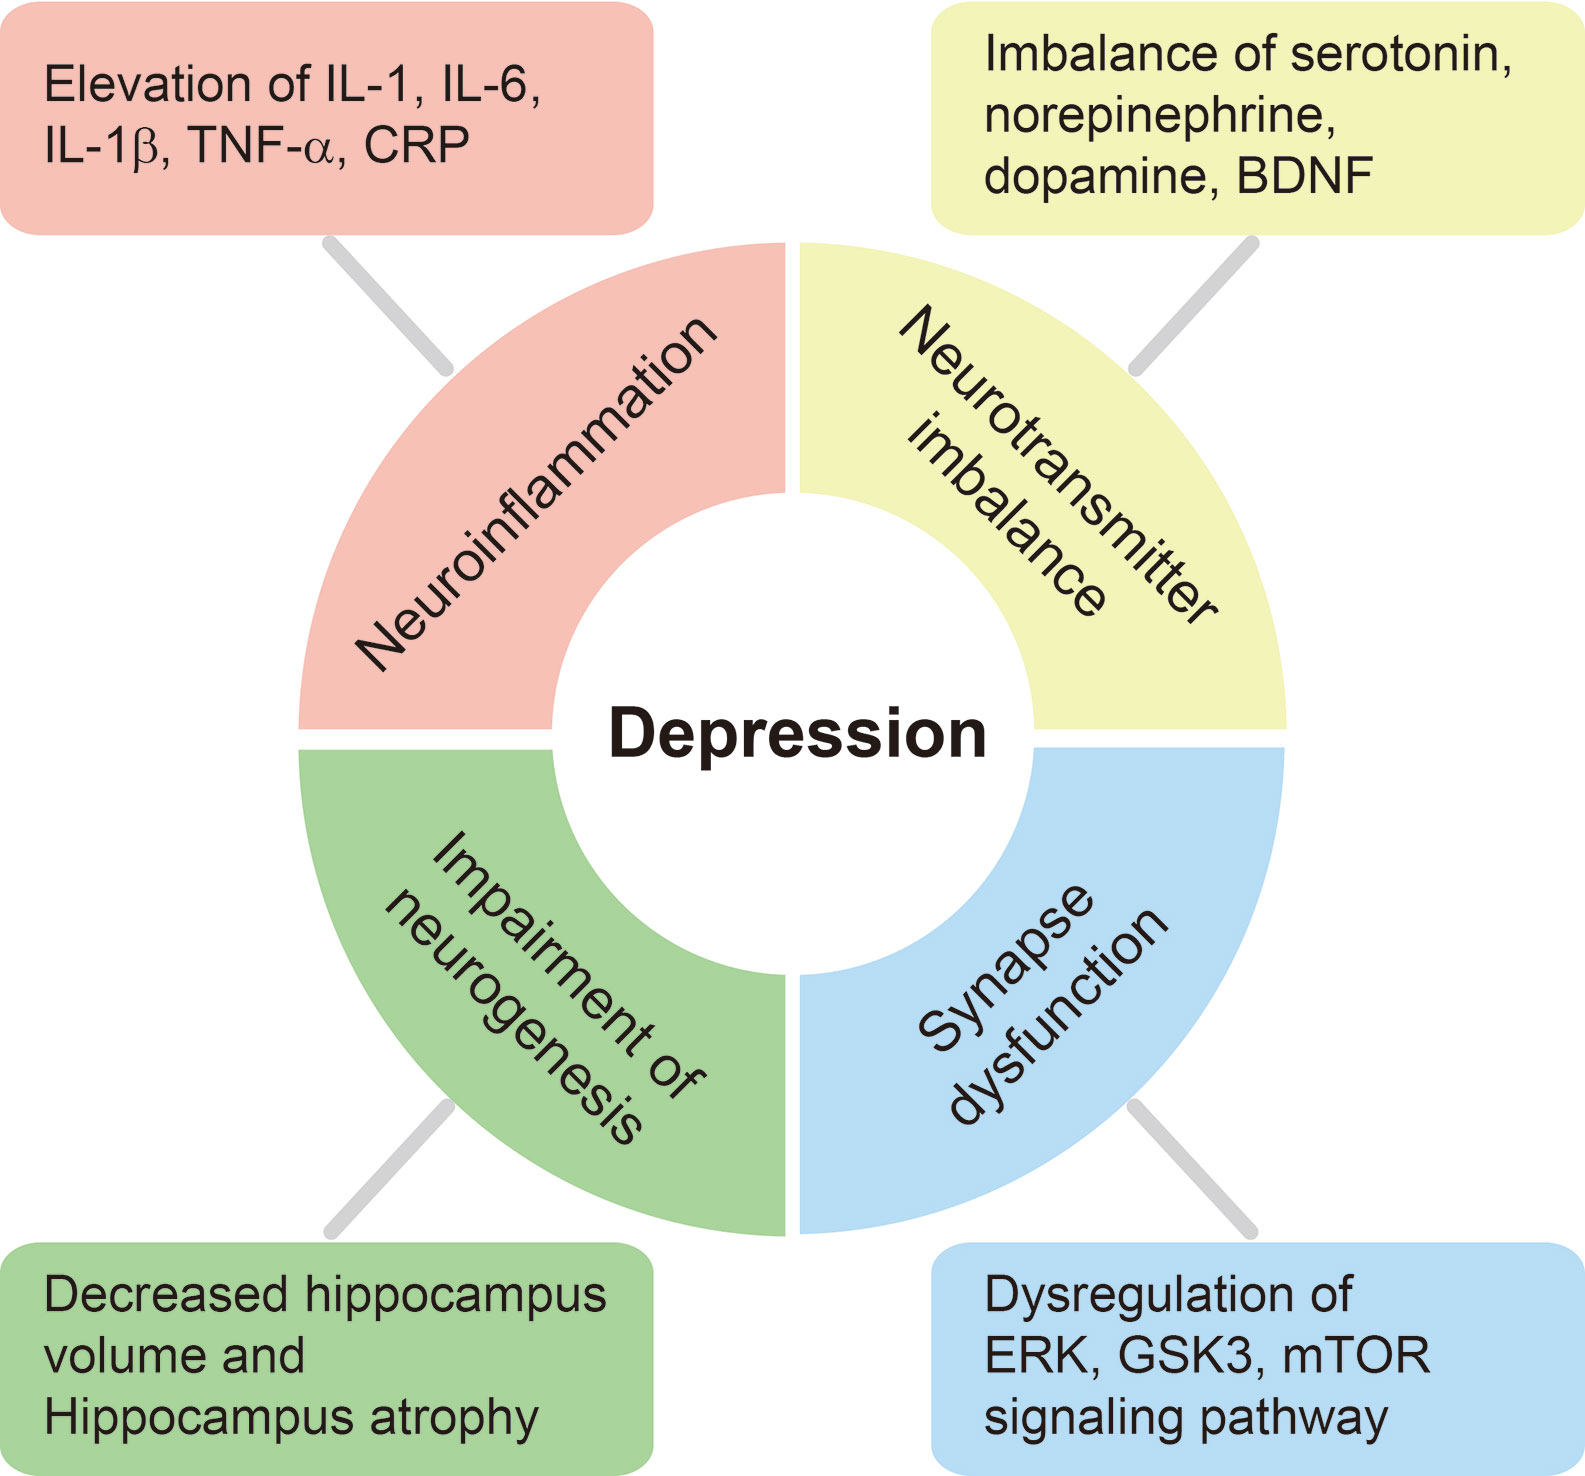 neurogenesis hypothesis of depression